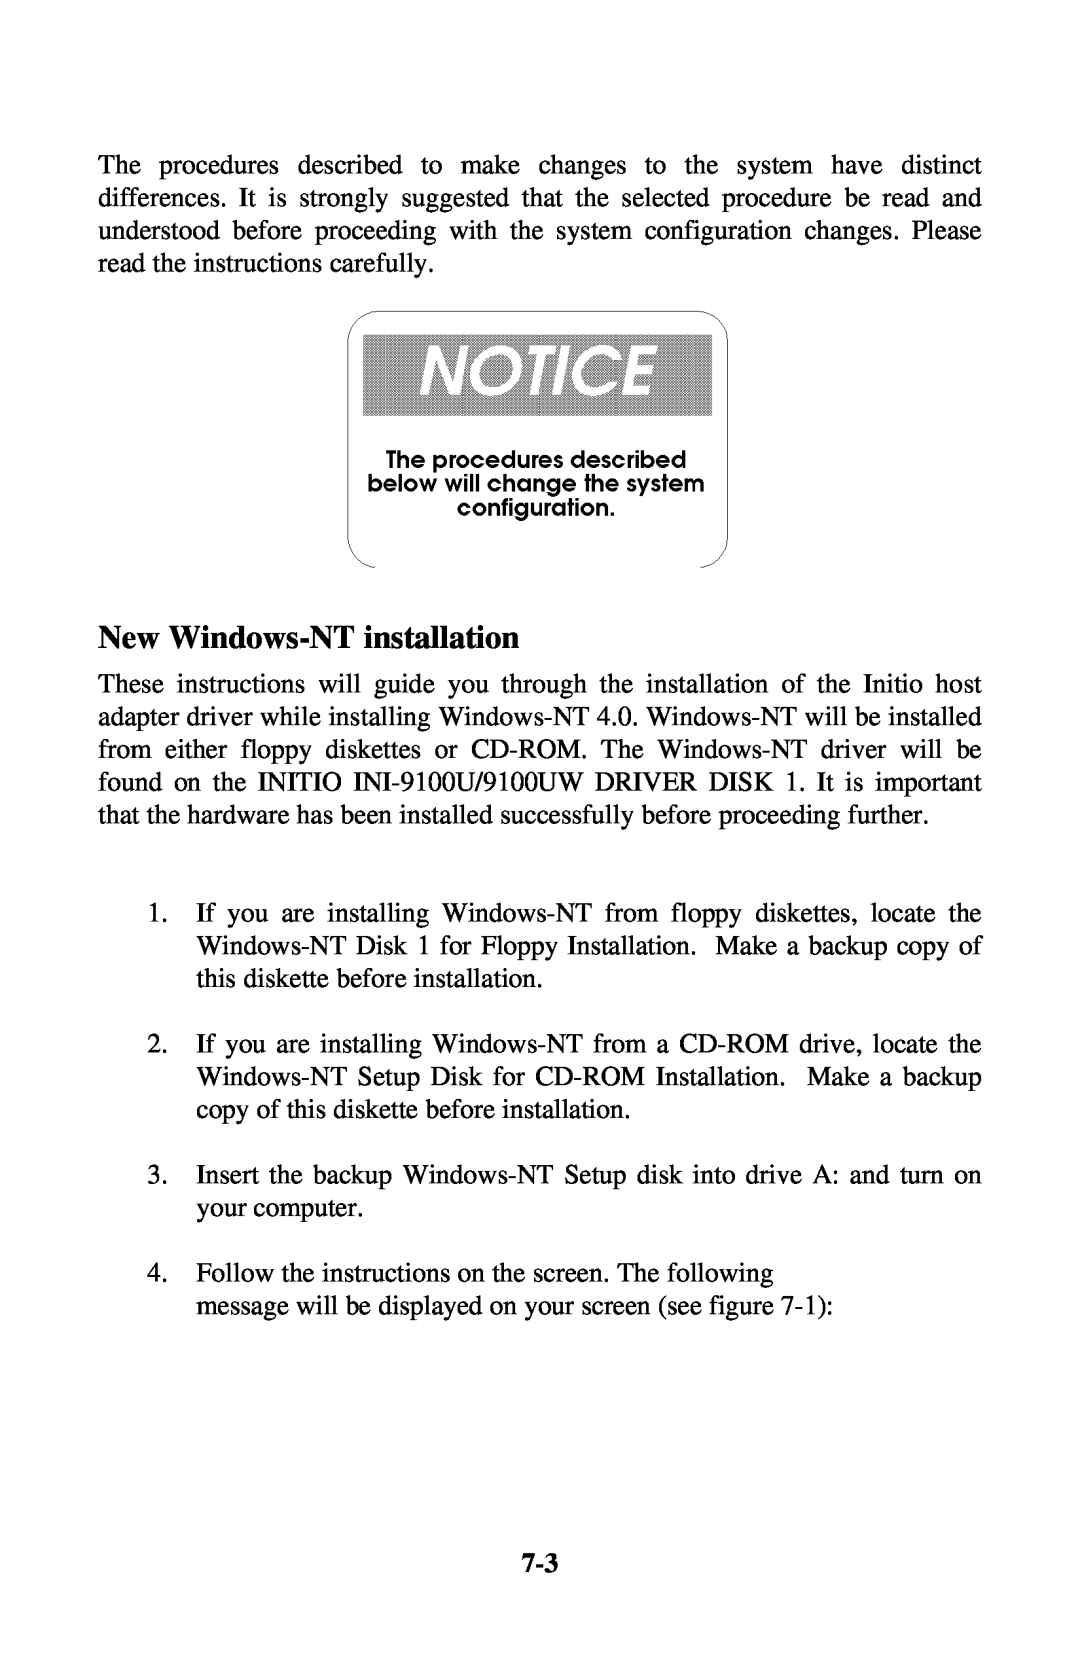 Initio INI-9100UW user manual New Windows-NT installation 